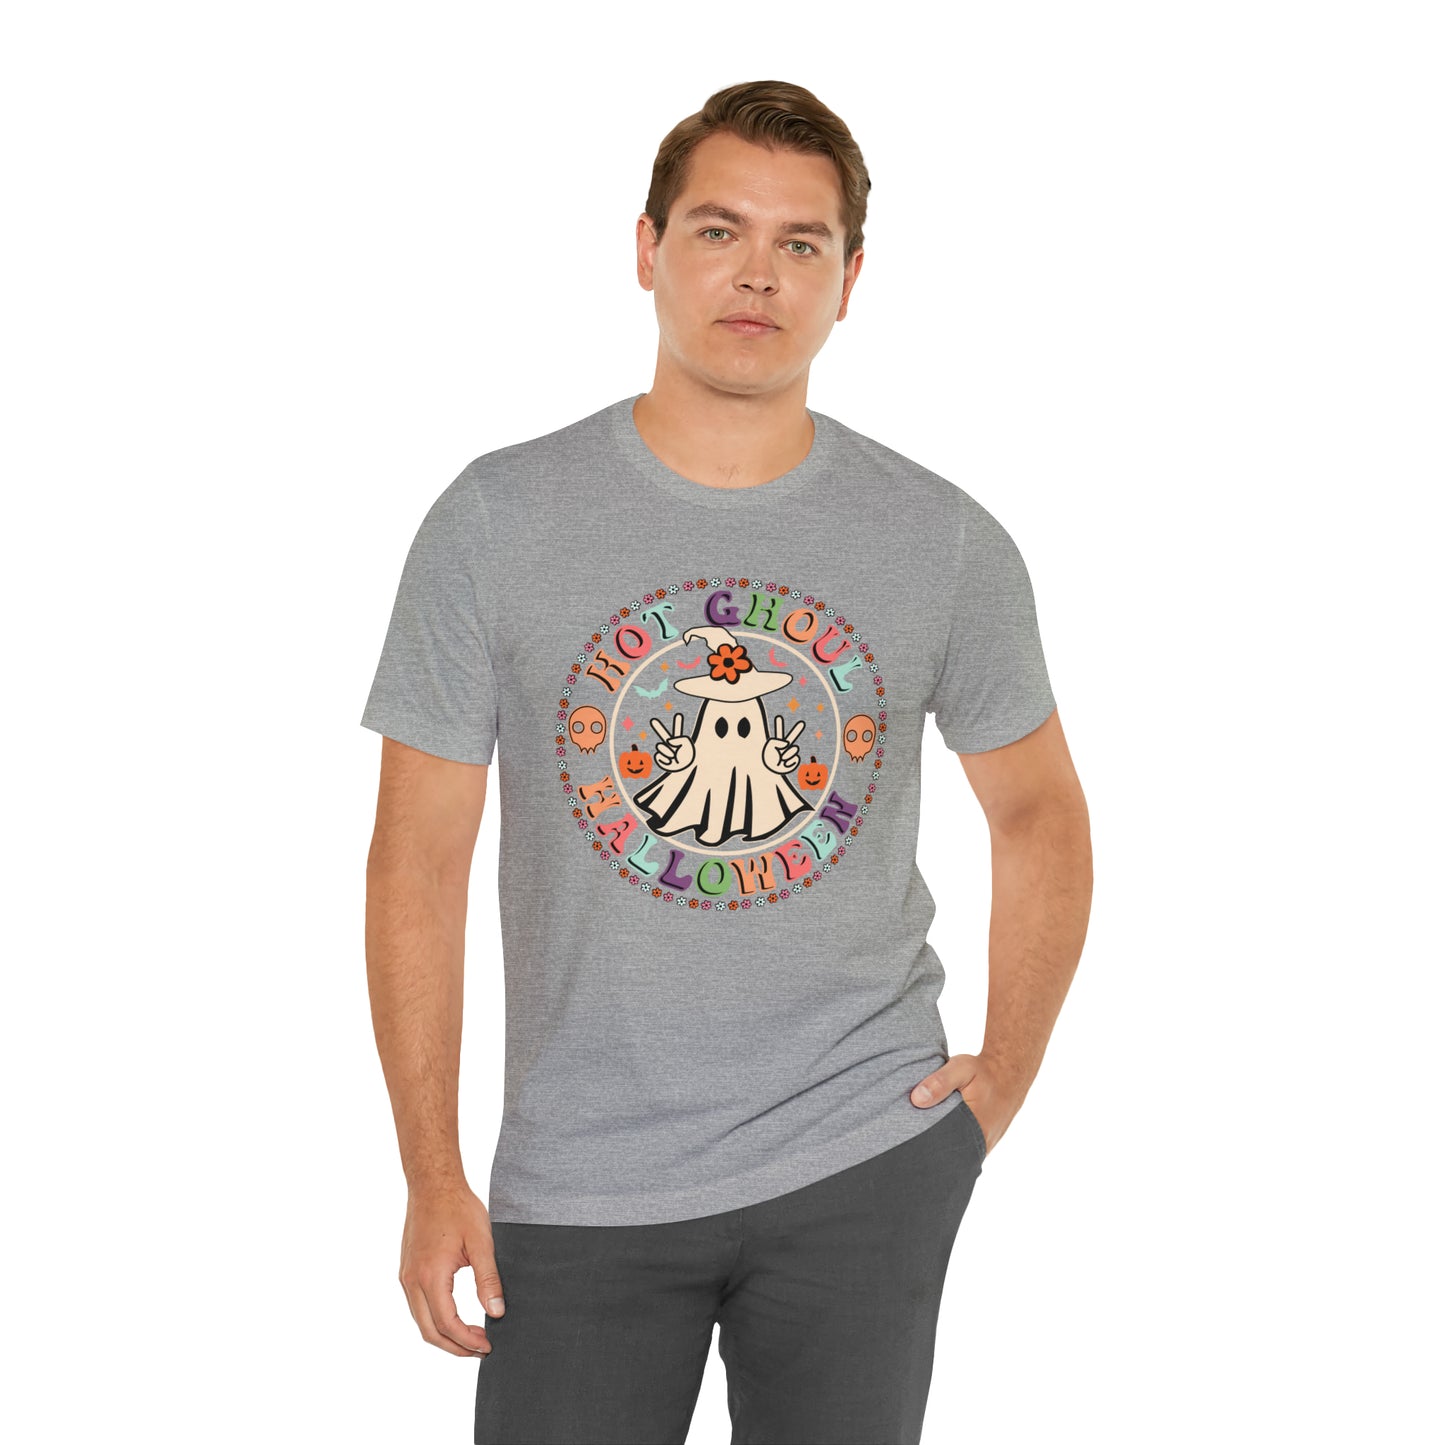 Lets Go Ghouls Shirt, Spooky Season Tee, Retro Halloween Cowgirl Shirt, Cowgirl Halloween Shirt, Vintage Ghost Shirt, T765